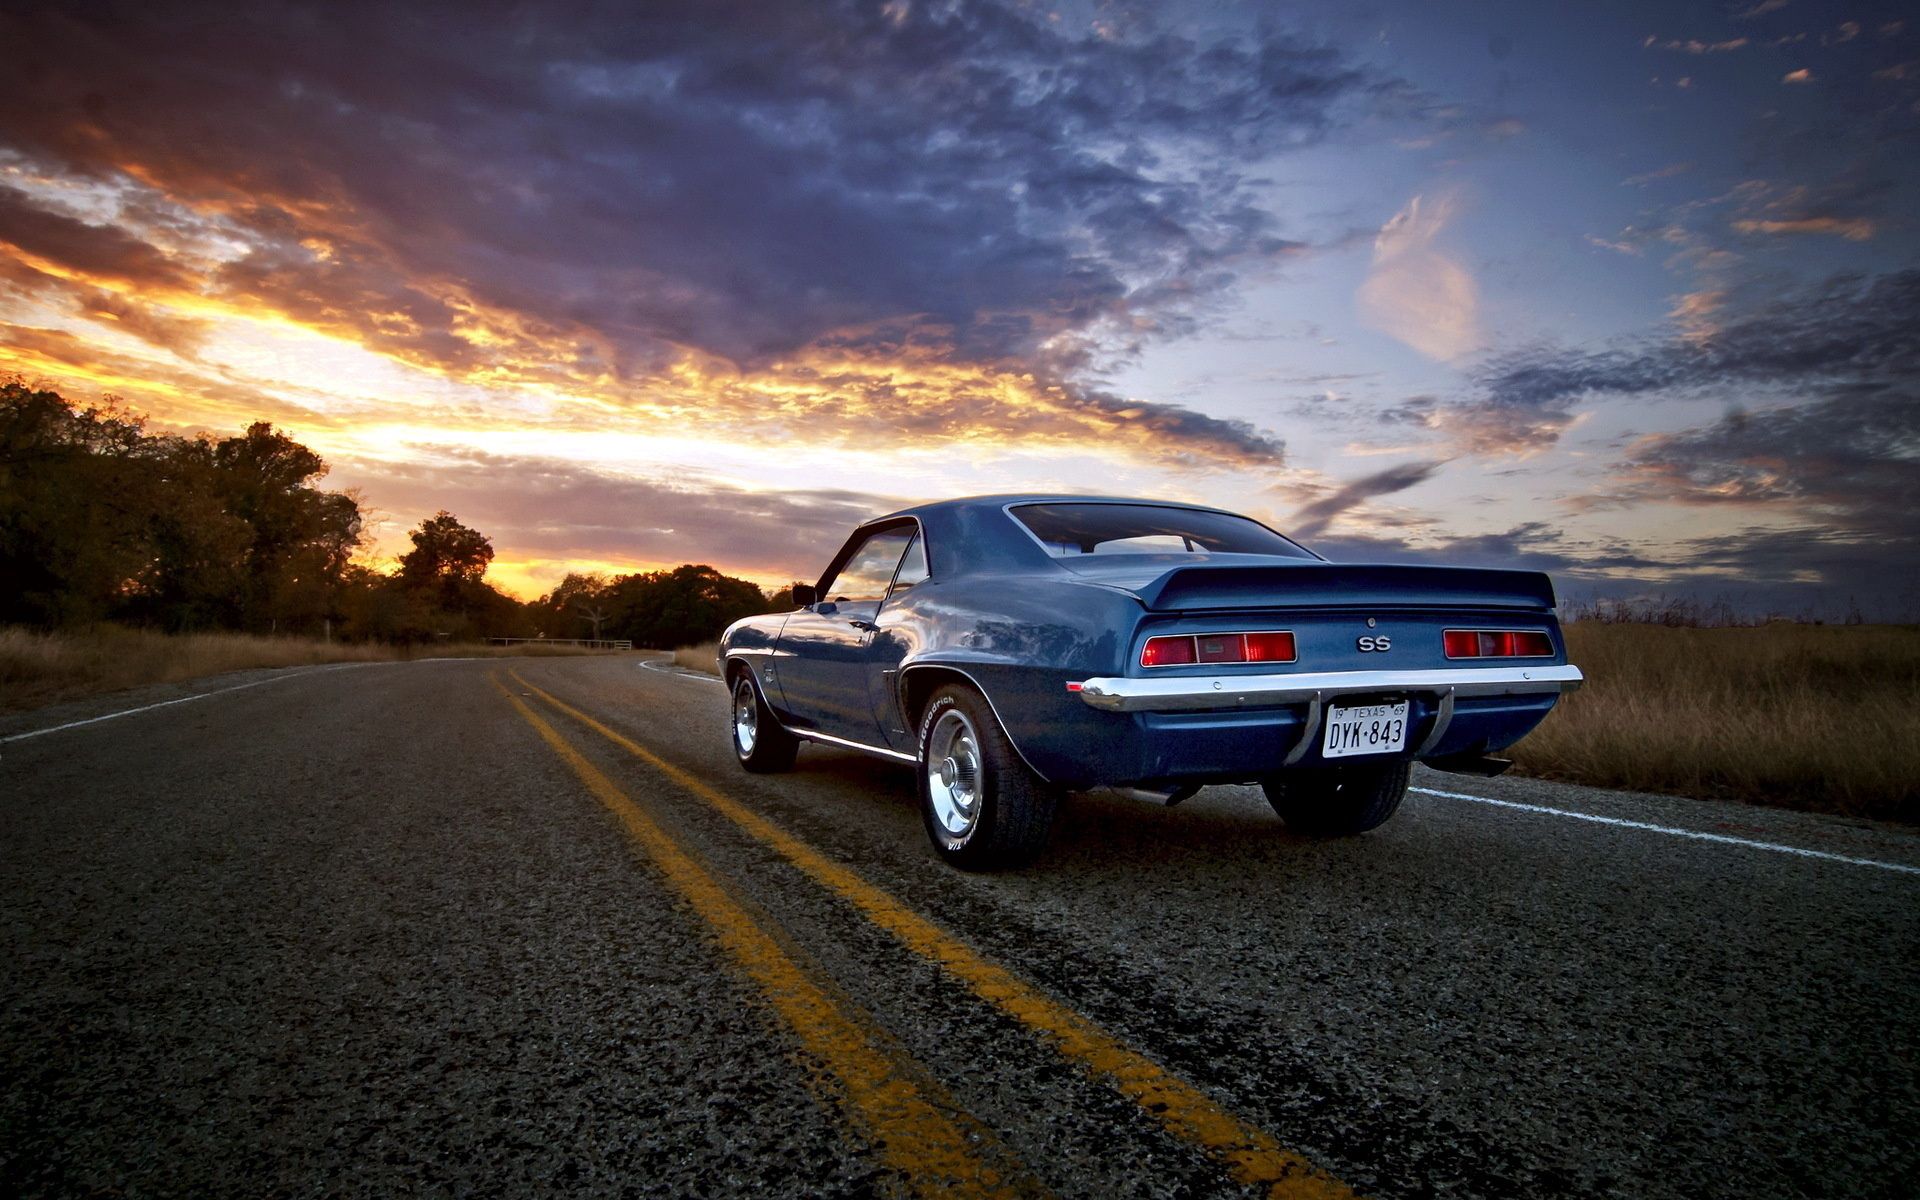 sunset, cars, road, camaro High Definition image